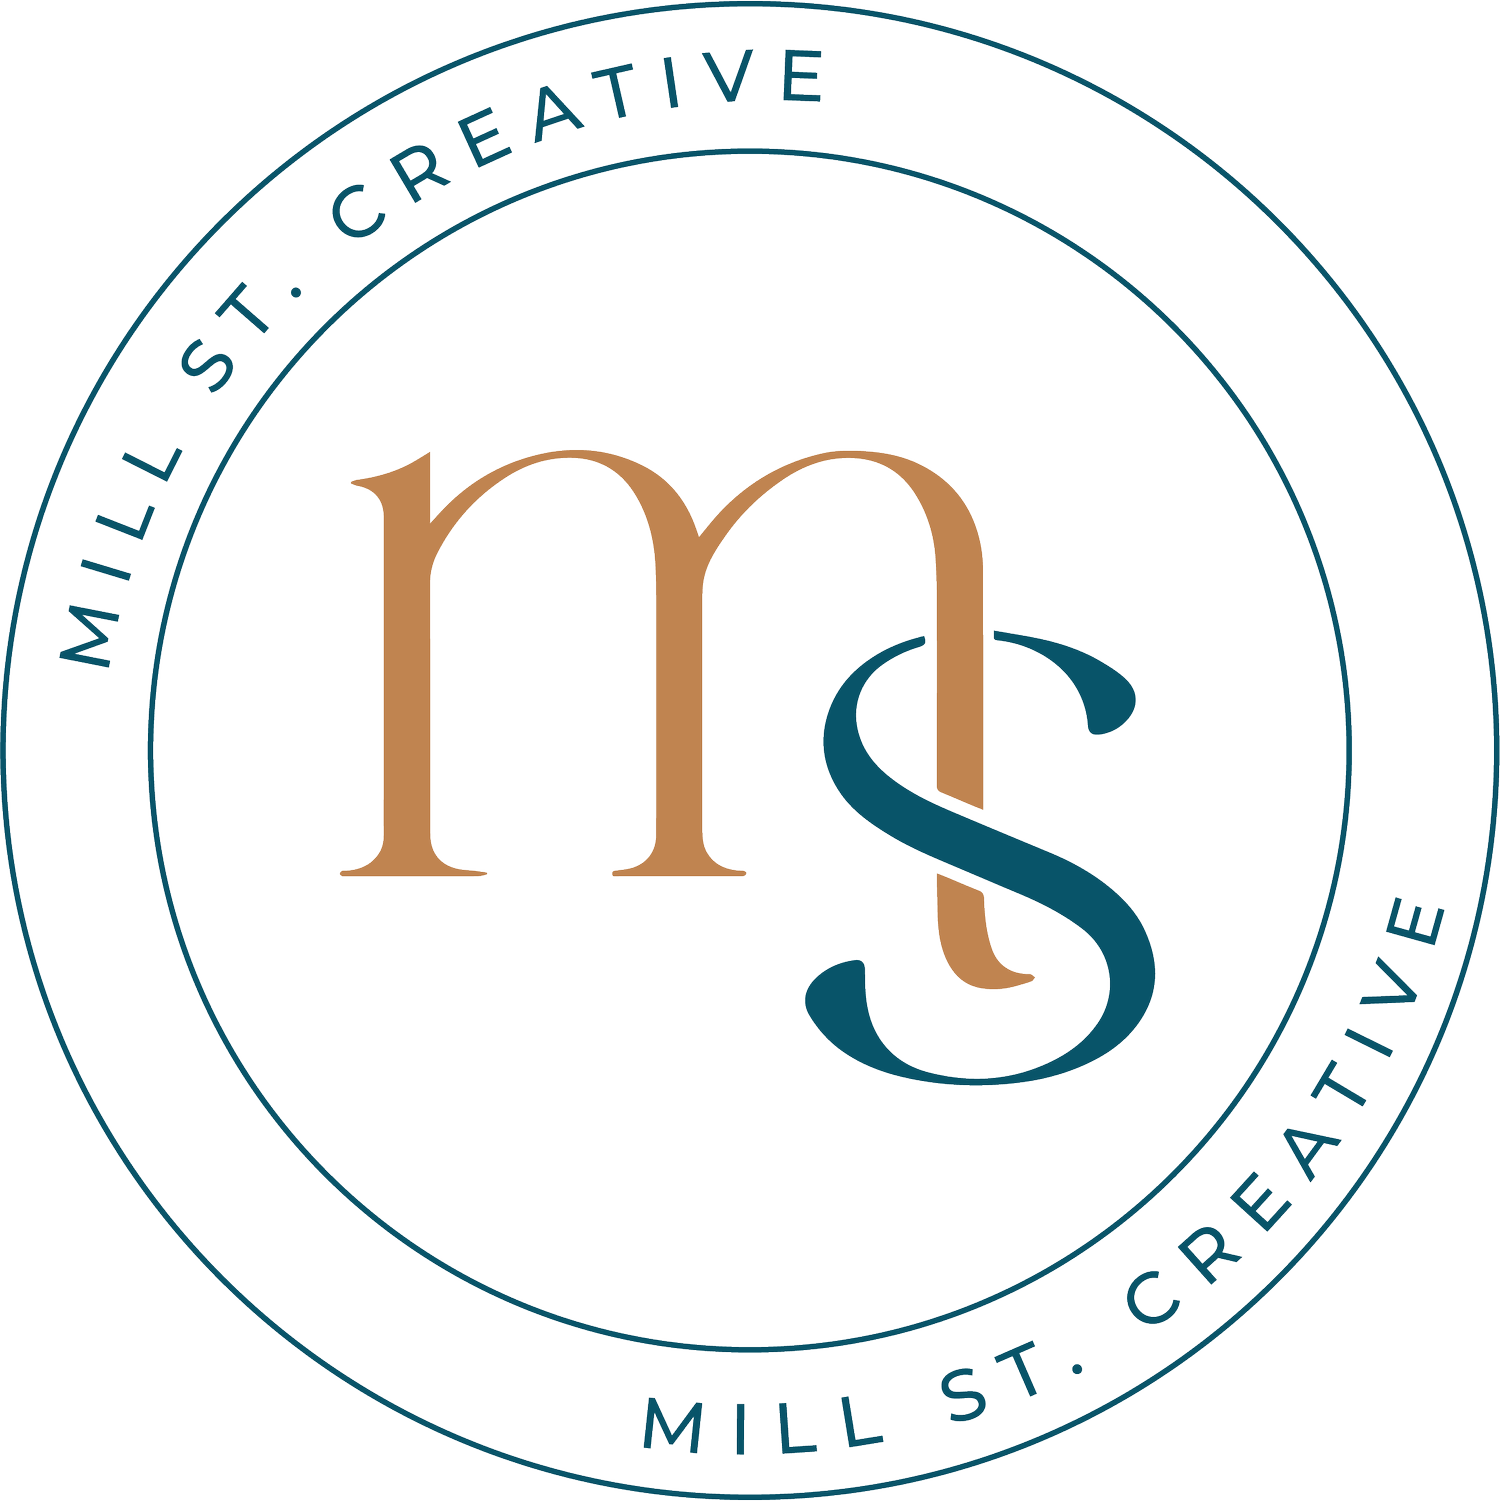 Mill St. Creative